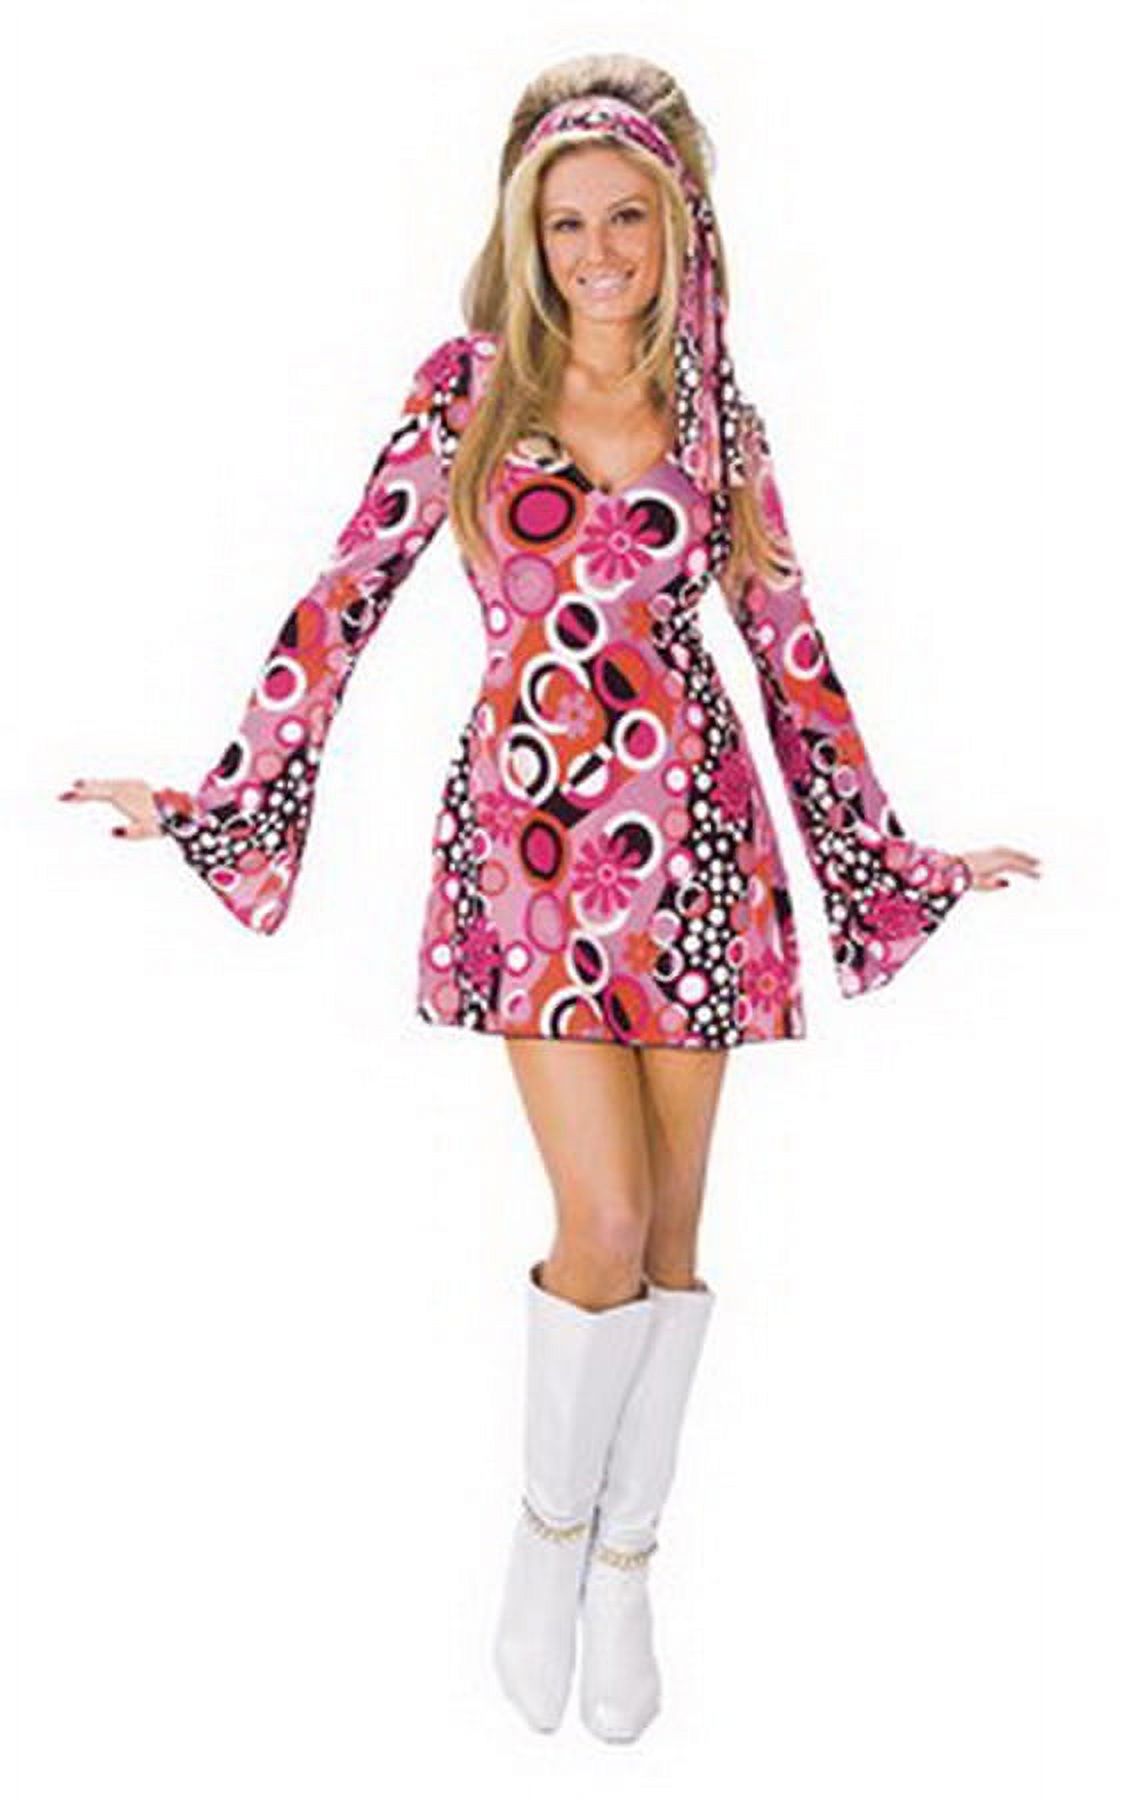 Fun World Groovy Women's Halloween Fancy-Dress Costume for Adult, M - image 1 of 1